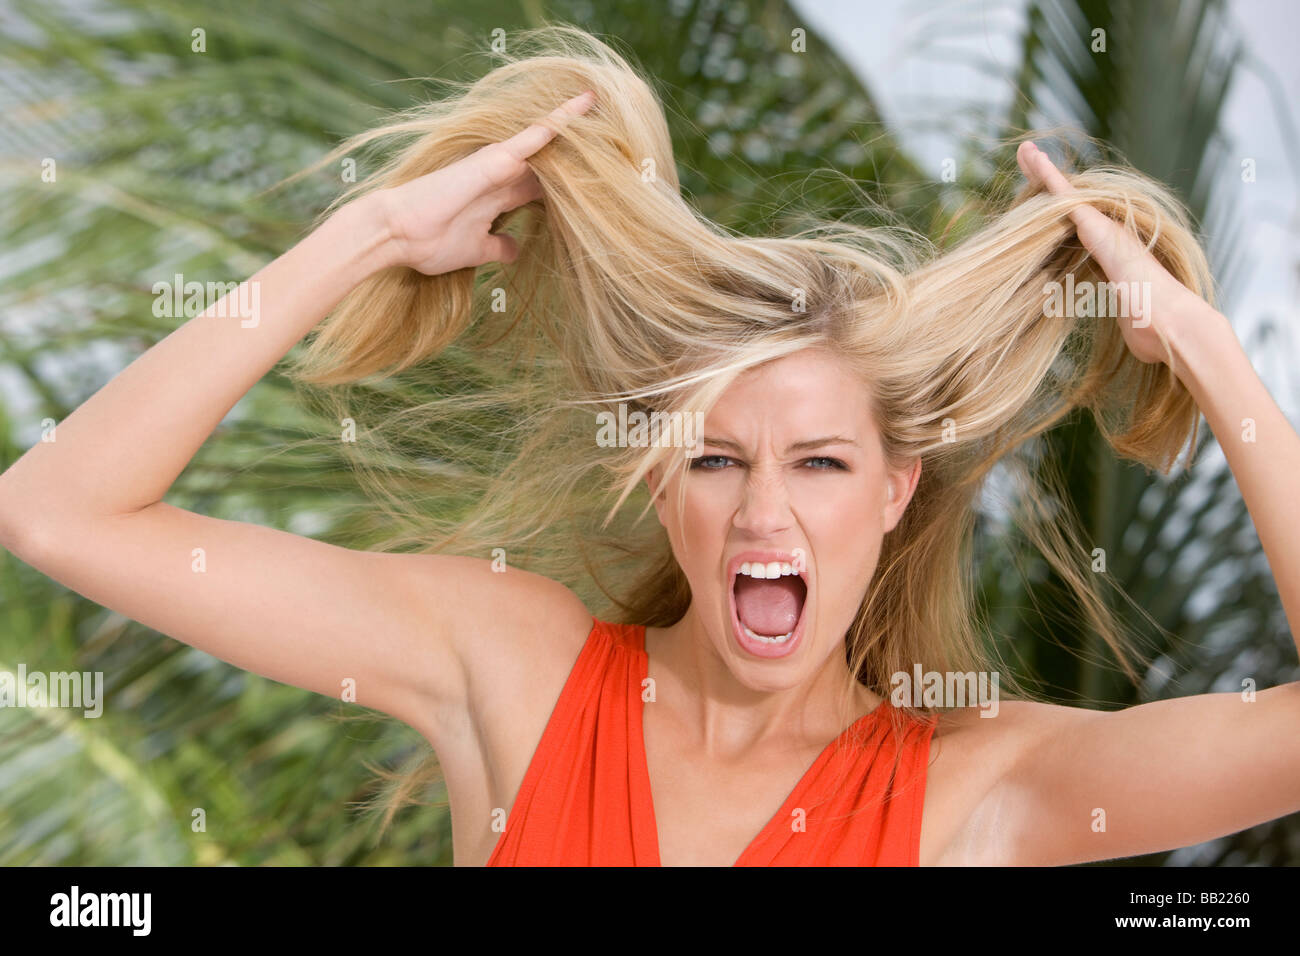 Portrait of a woman shouting Stock Photo